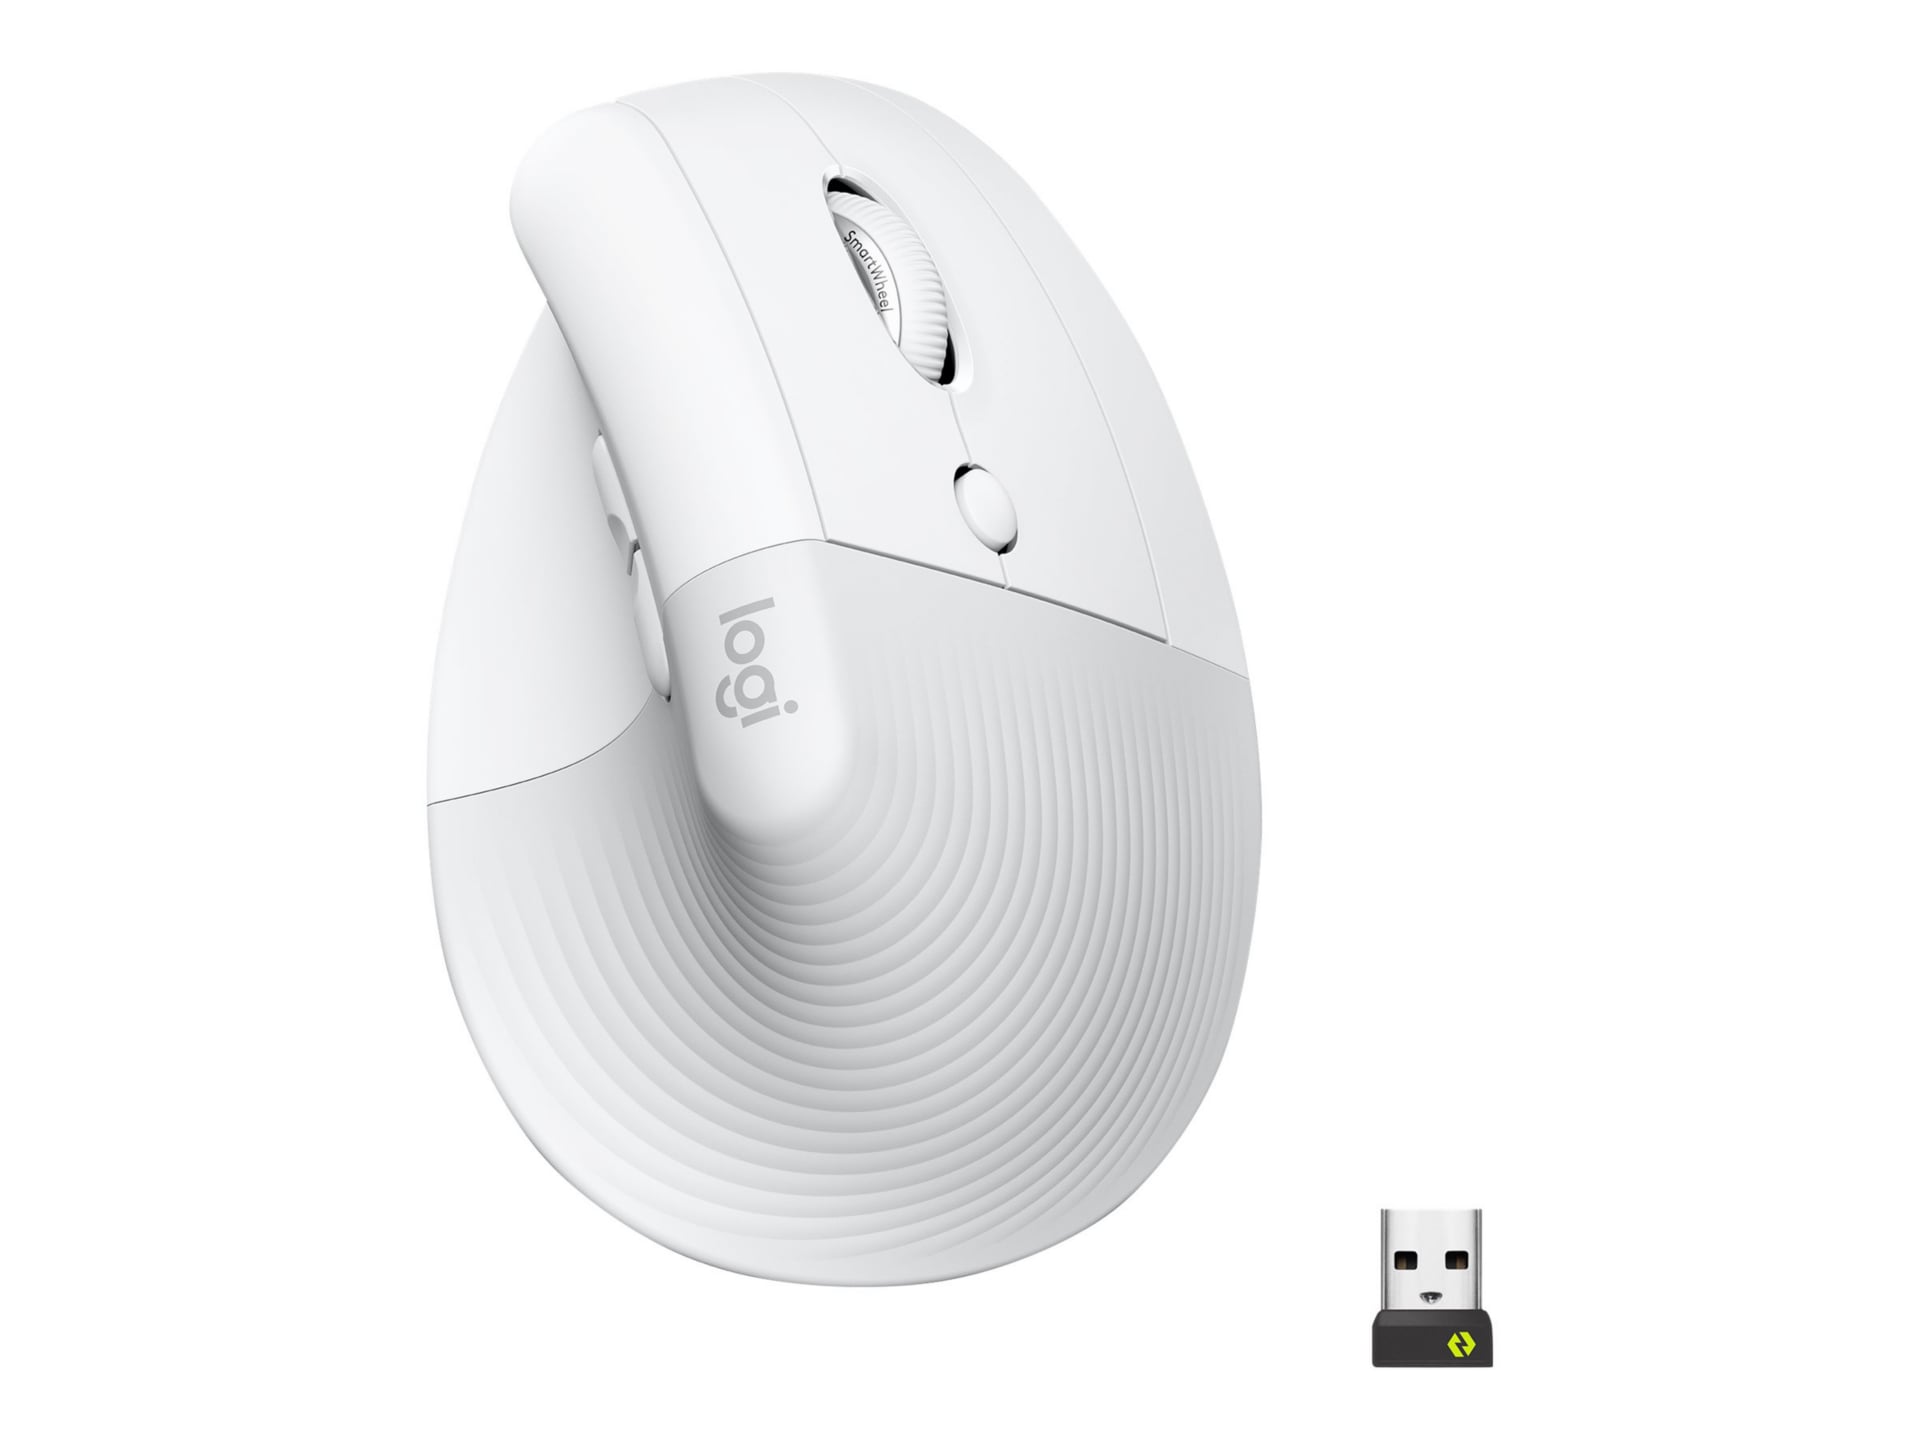 Logitech Lift Vertical Ergonomic Mouse - vertical mouse - Bluetooth, 2.4  GHz - off-white - 910-006469 - Mice 